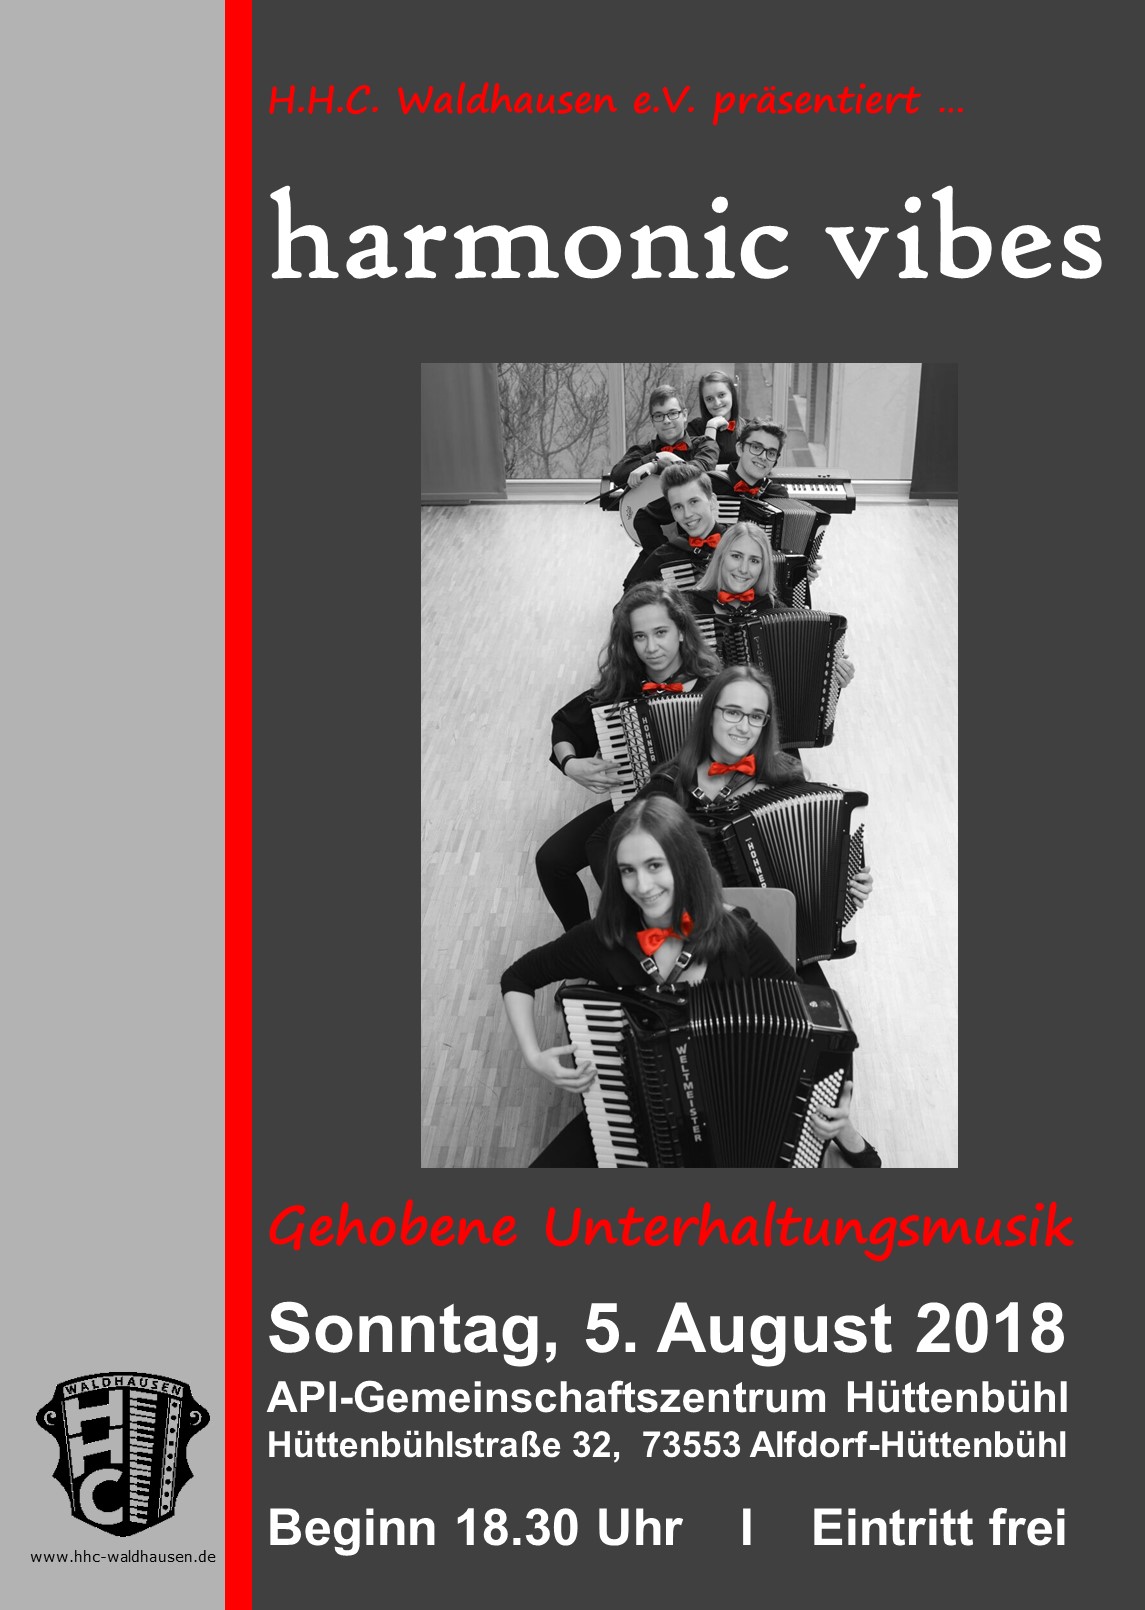 Konzert mit dem Ensemble "harmonic vibes"